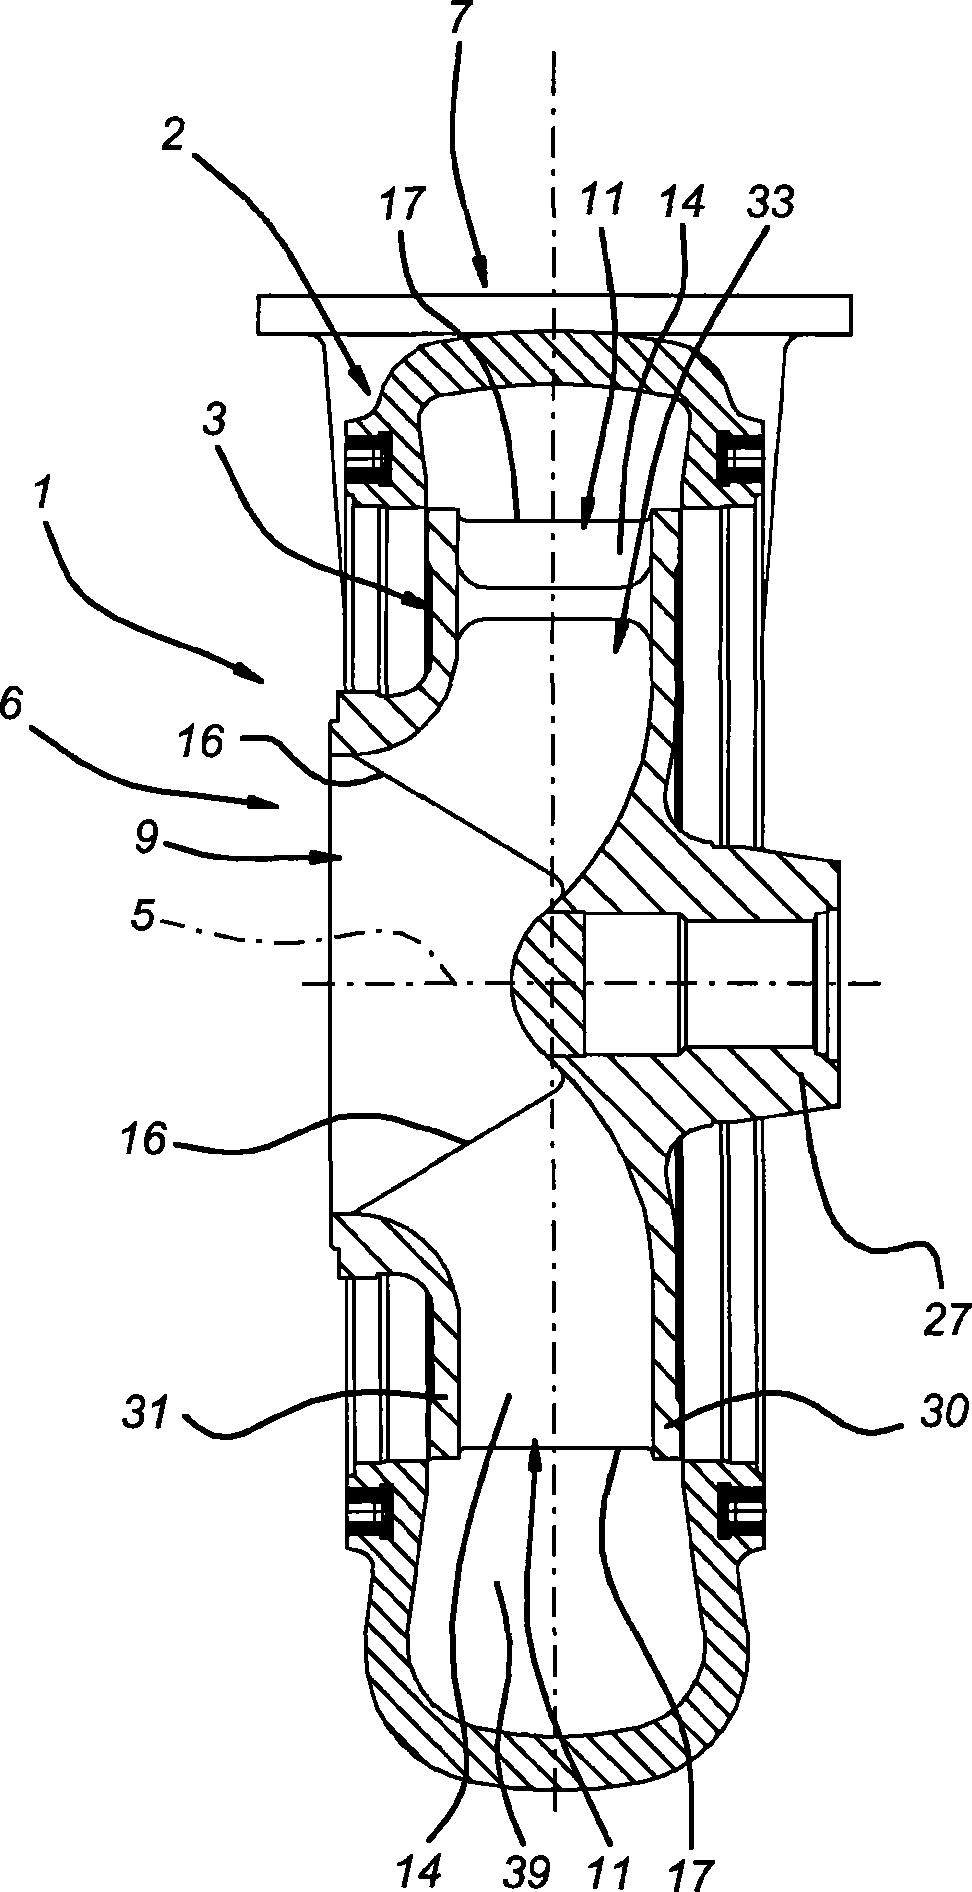 Centrifugal pump impeller